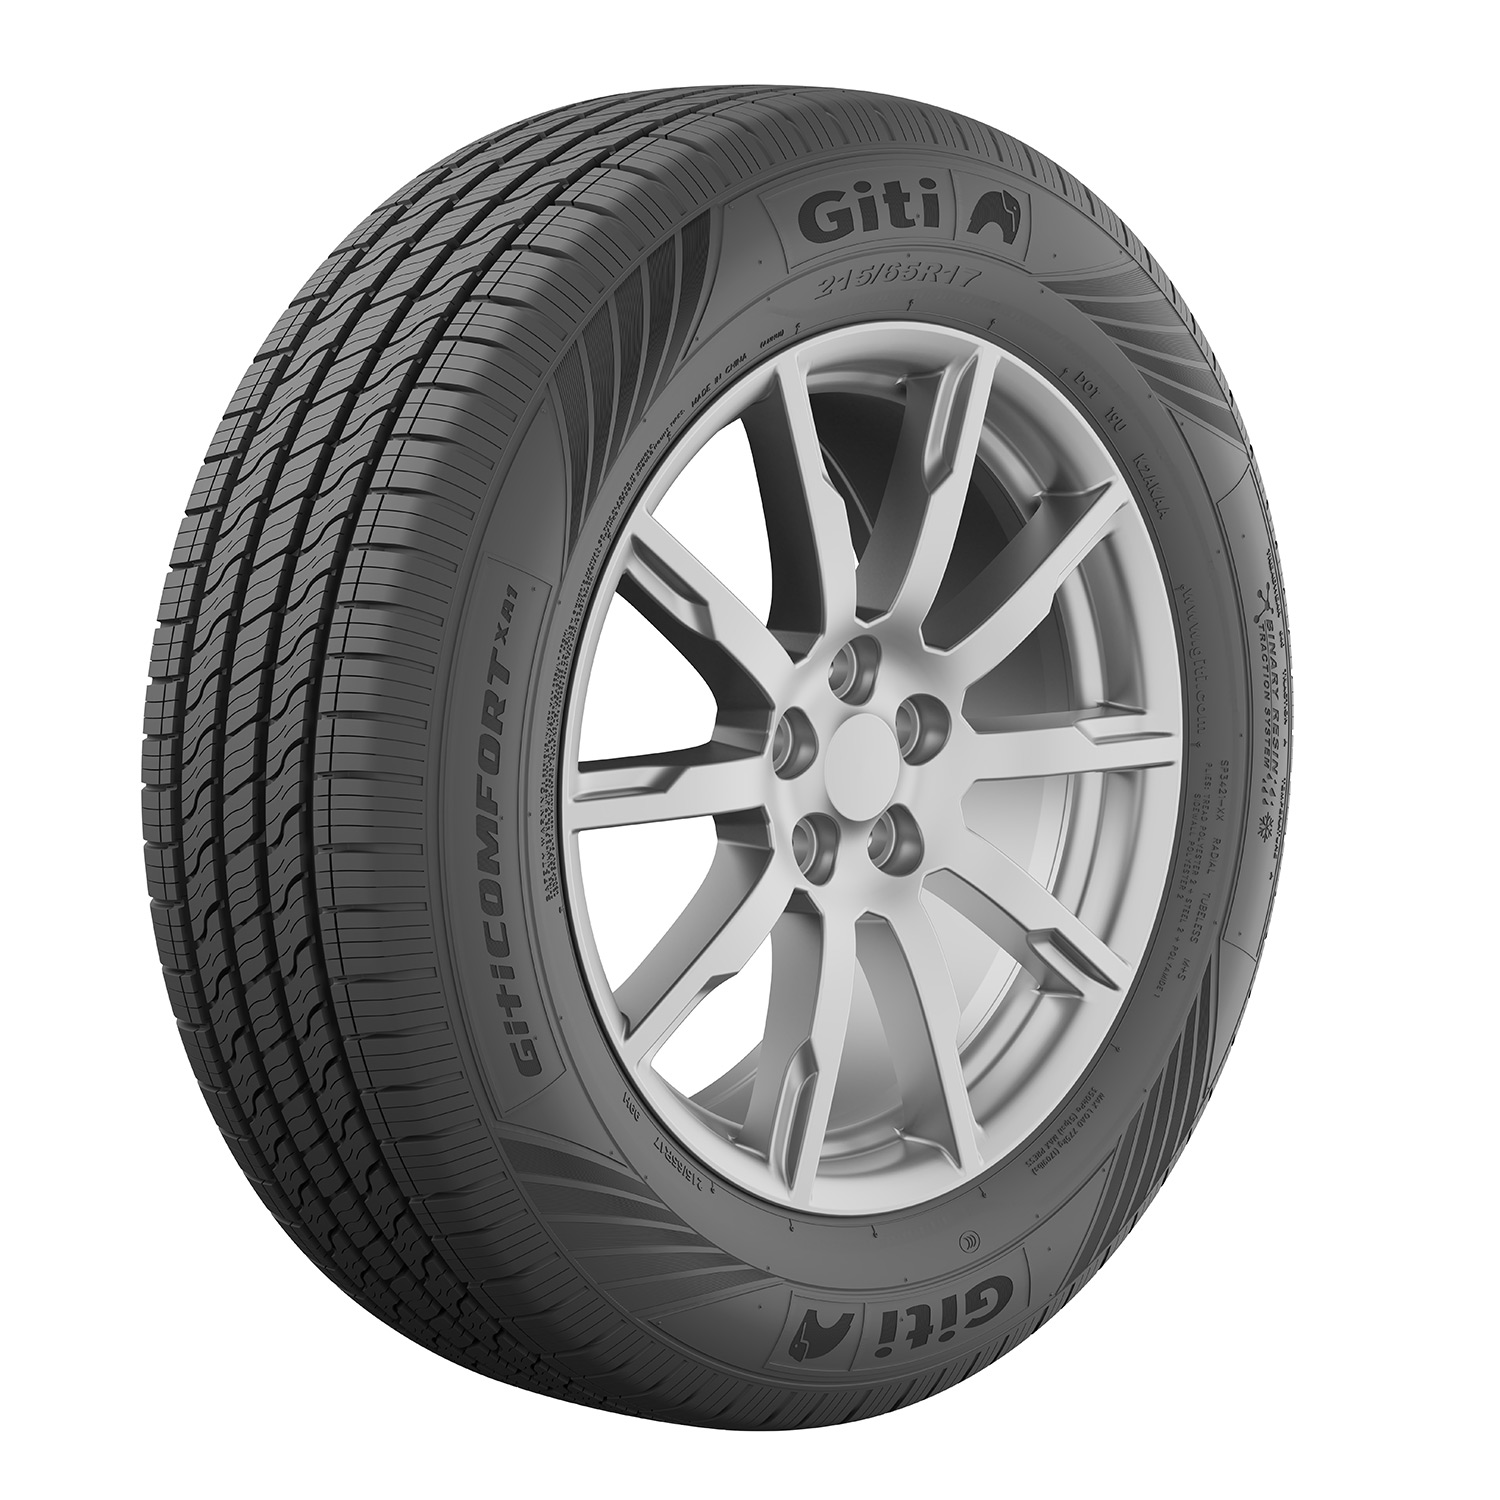 GitiCOMFORT XA1 Premium All Season Tire